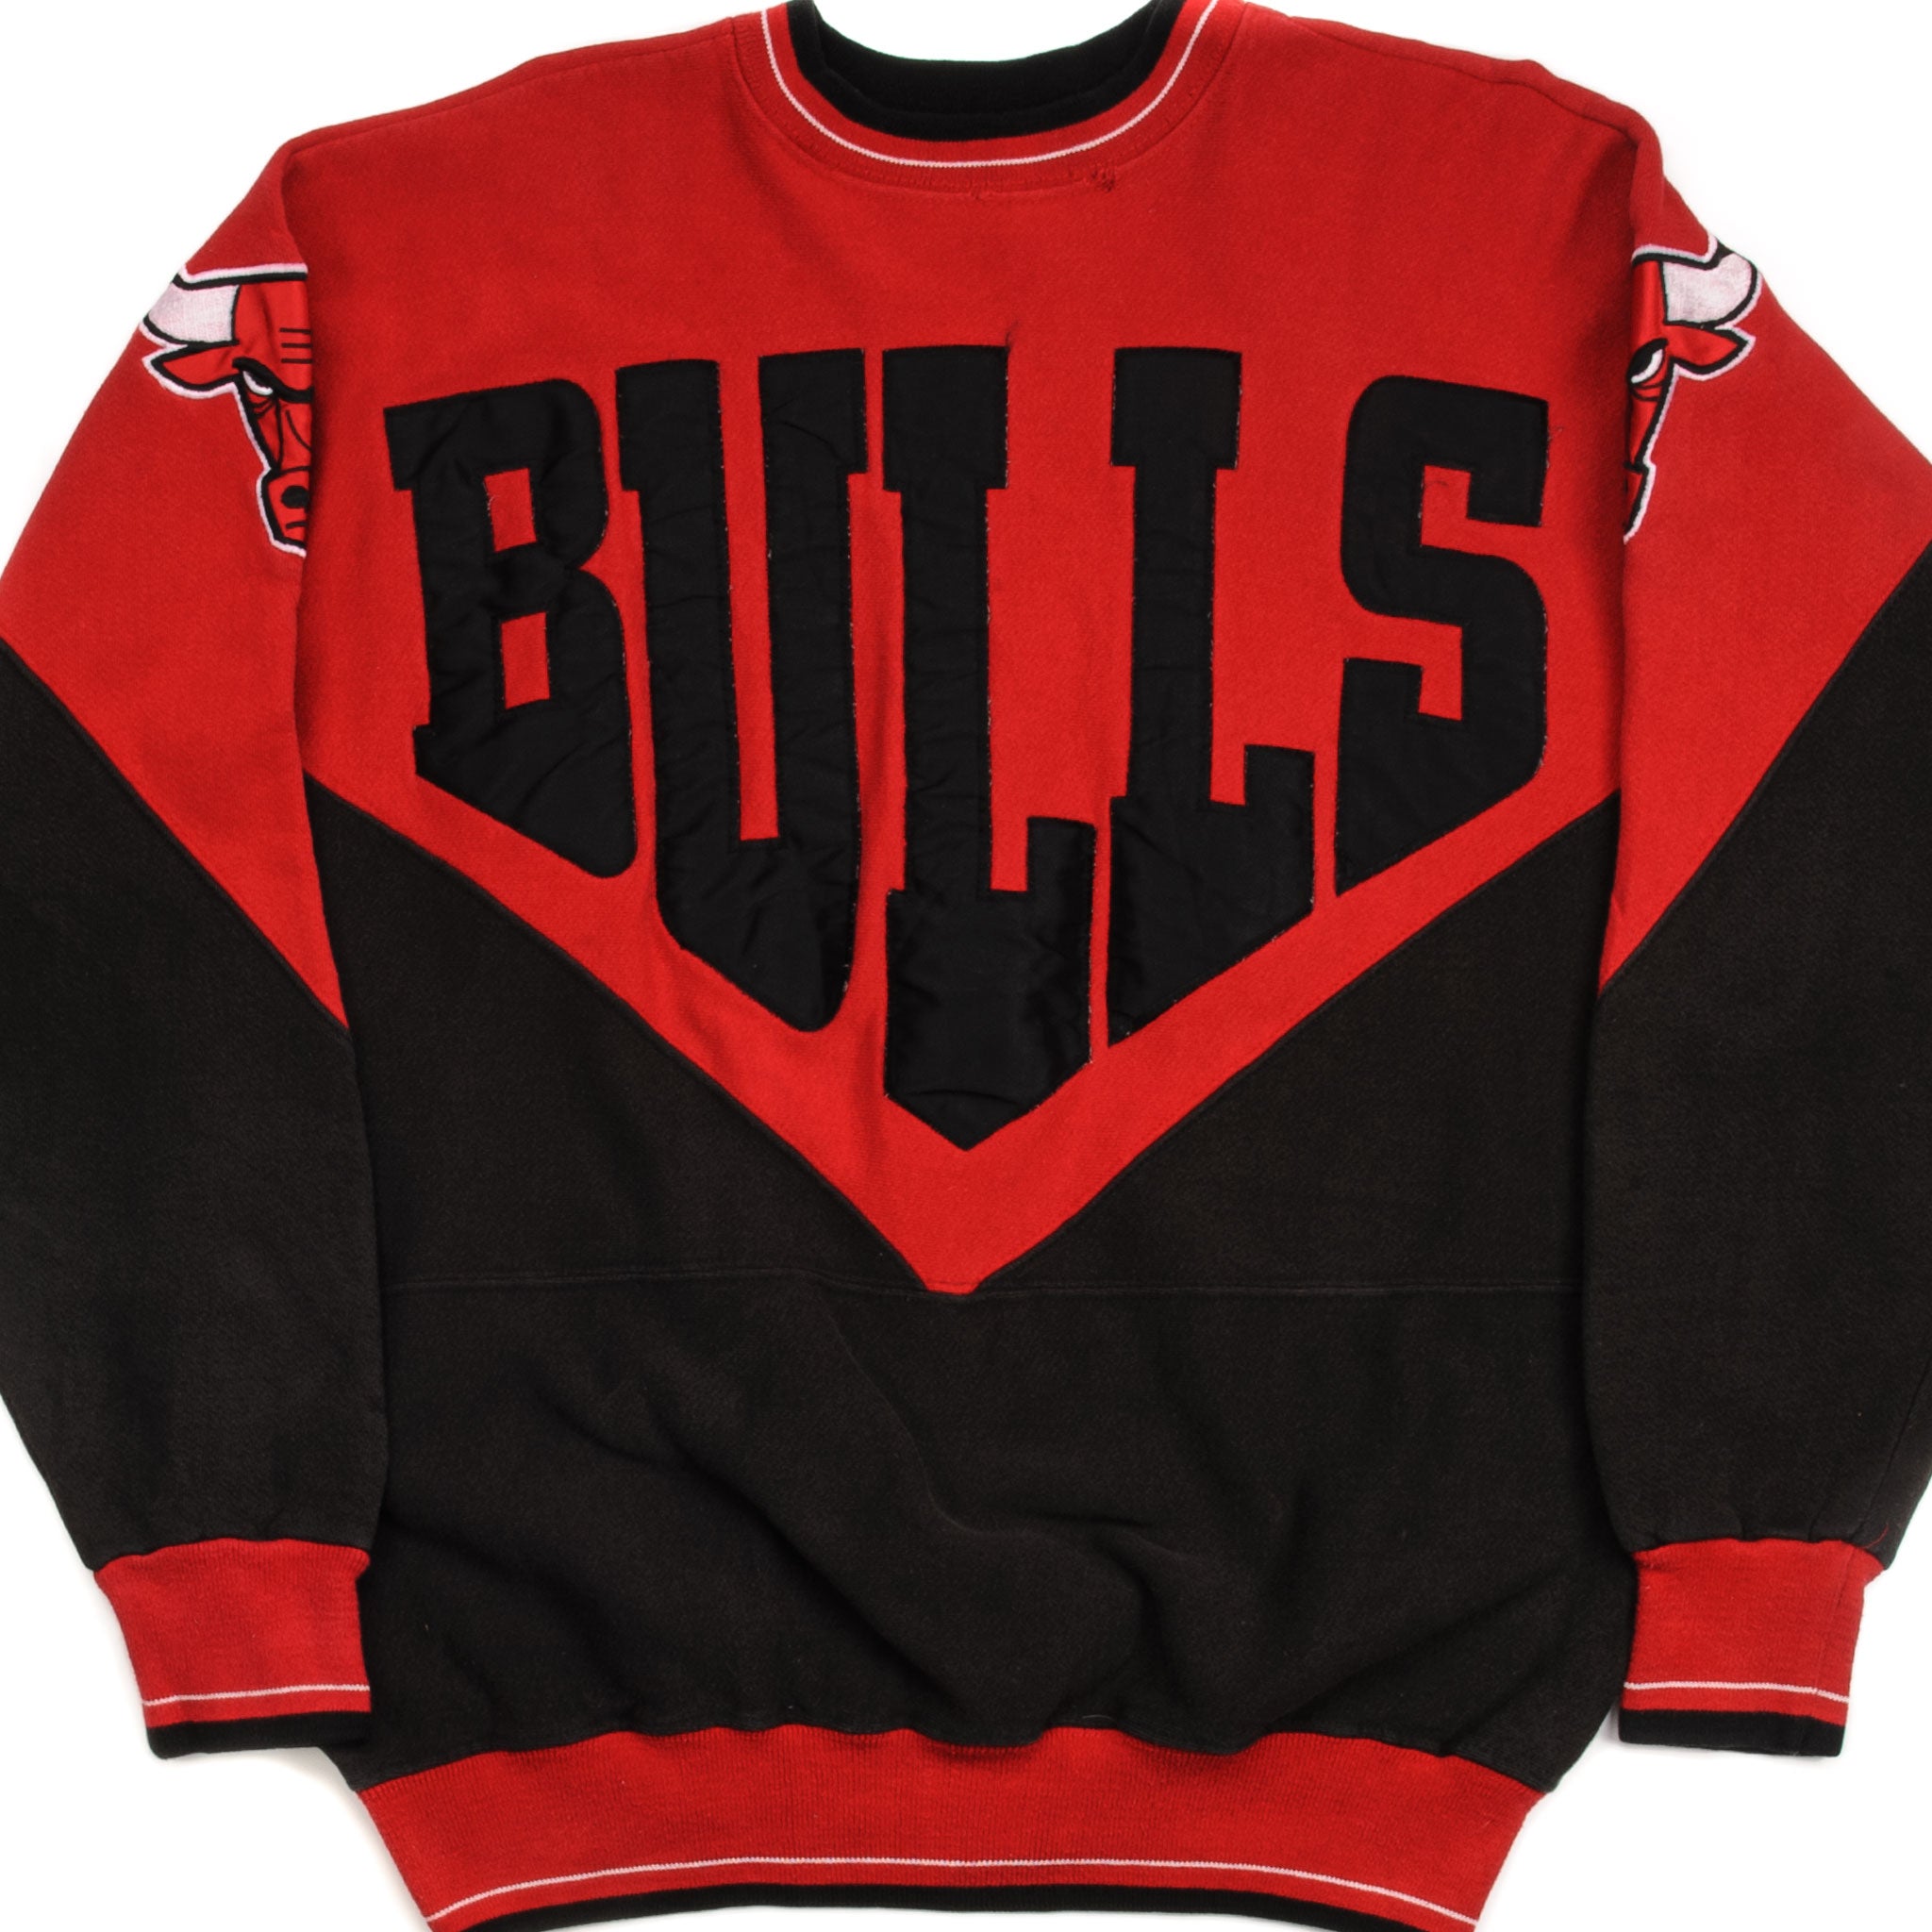 VTG Chicago Bulls Crewneck Sweatshirt Red 90s NBA Made USA Mens M